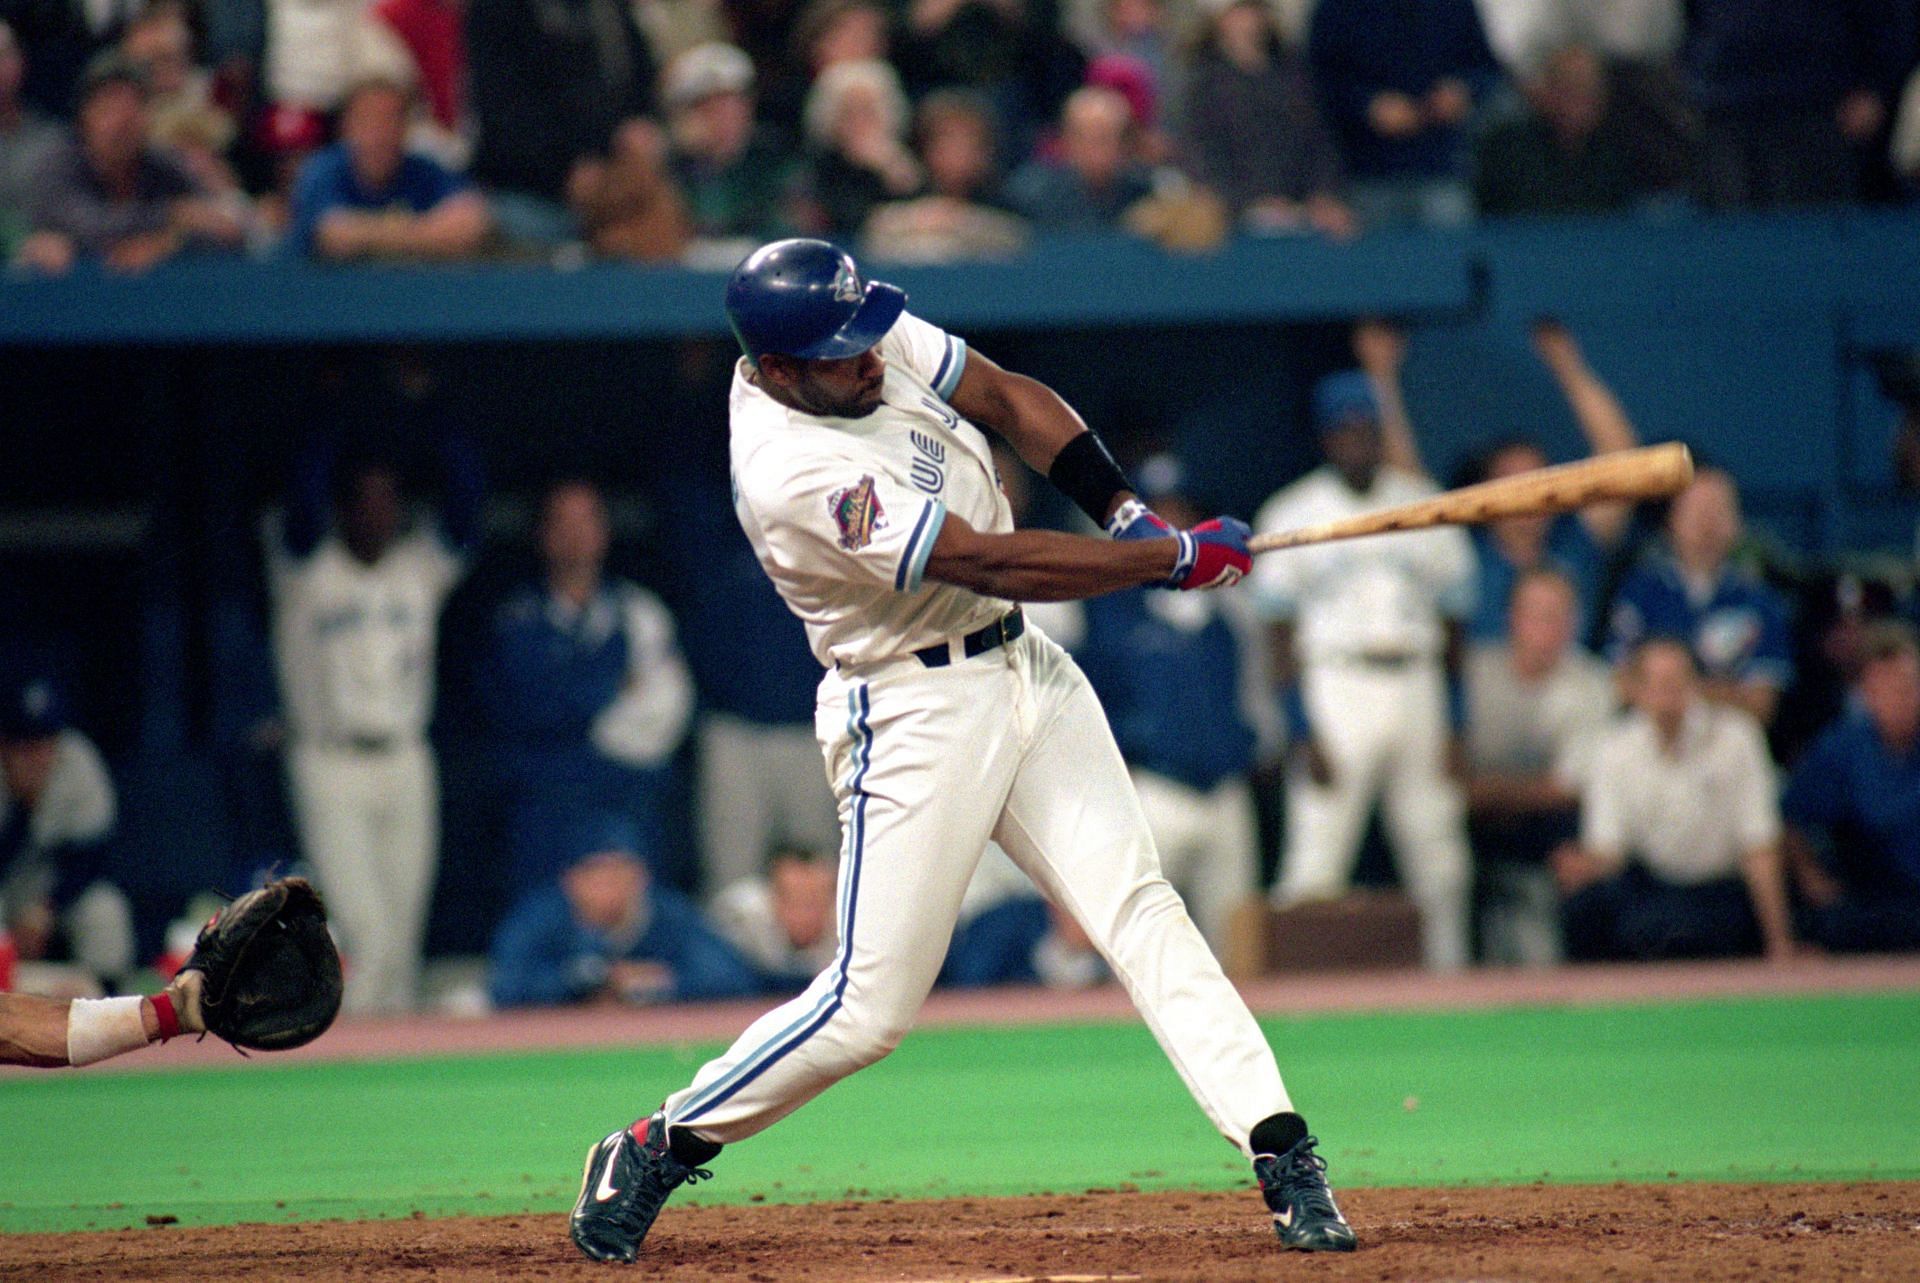 1993 World Series Game 6, Philadelphia Phillies vs. Toronto Blue Jays.